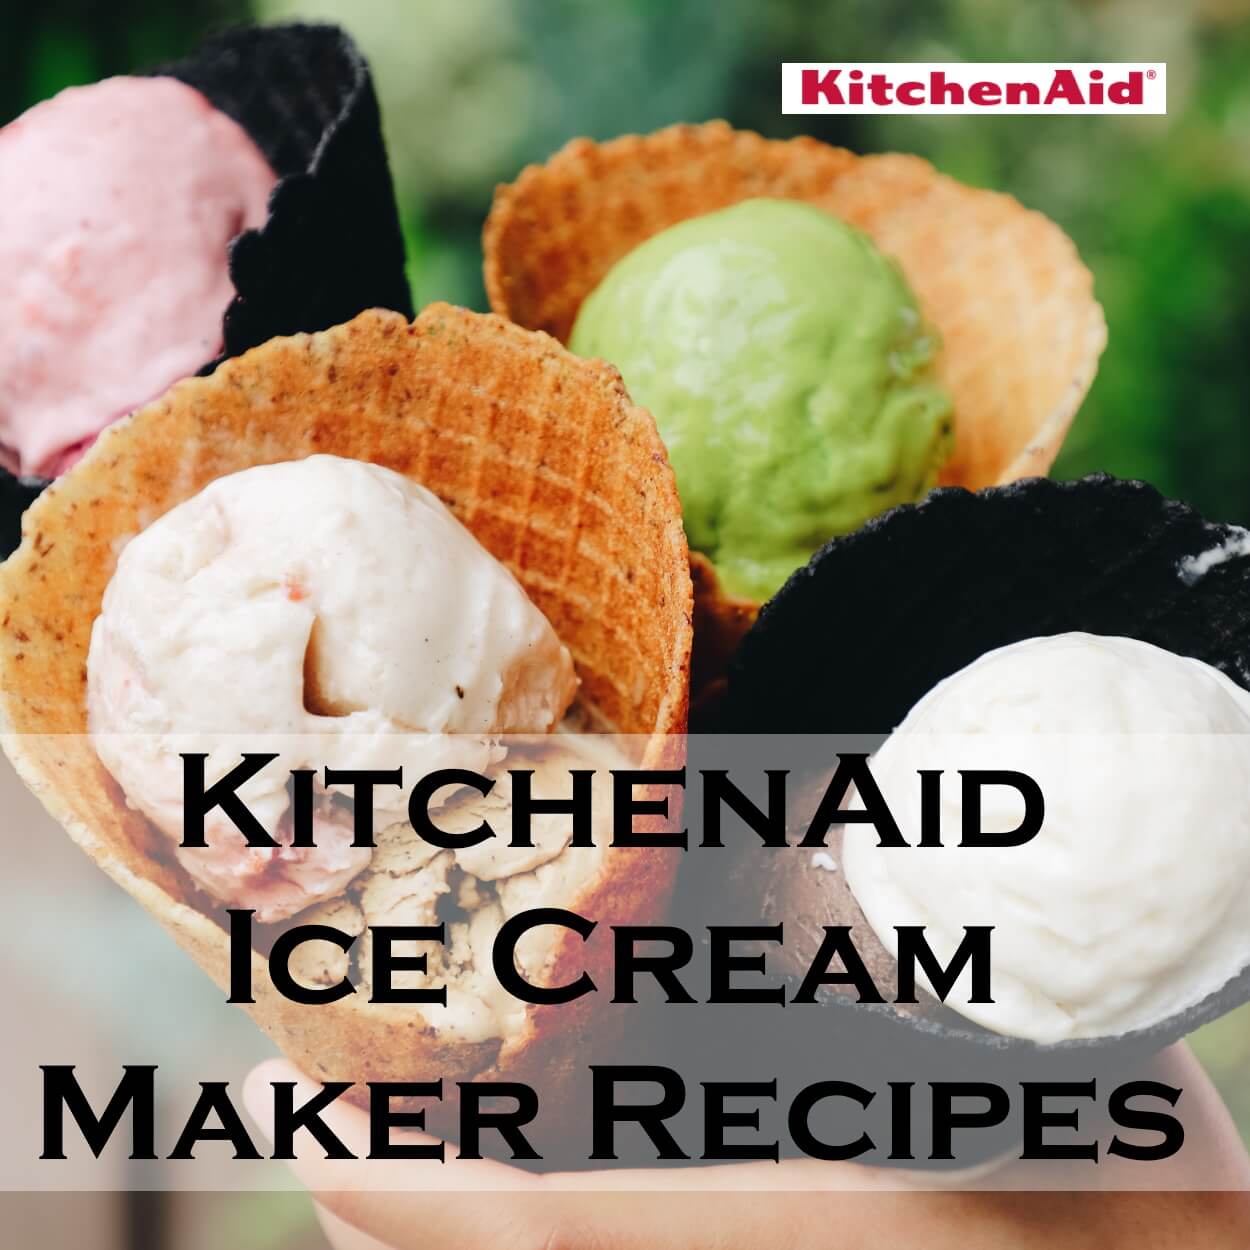 Kitchenaid Ice Cream Maker Recipes Perfect For Your Kitchen Aid Attachment